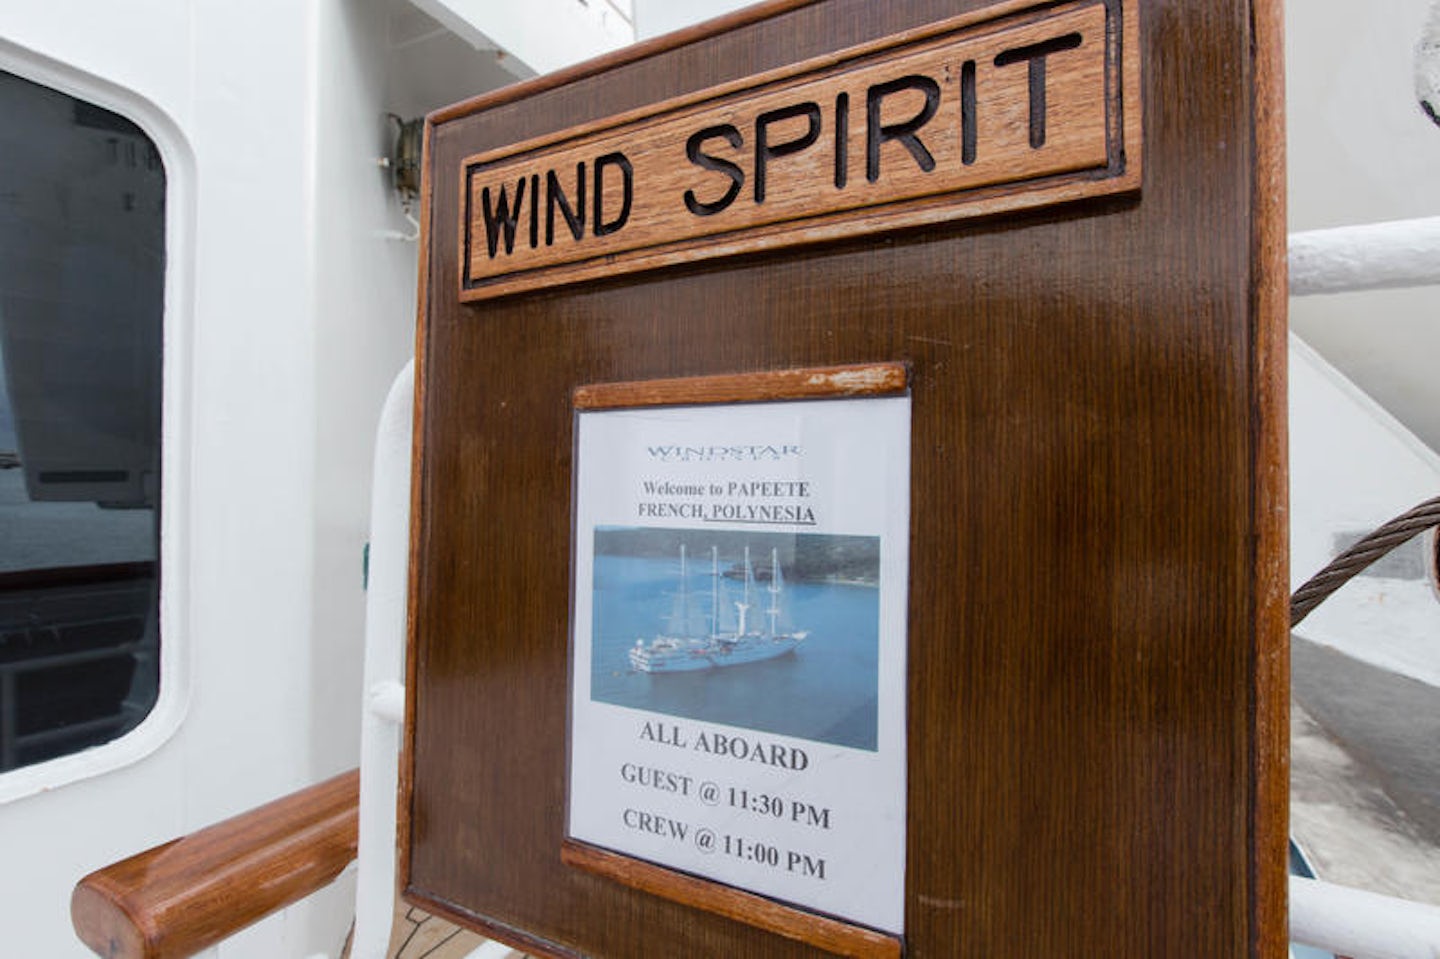 Embarkation on Wind Spirit